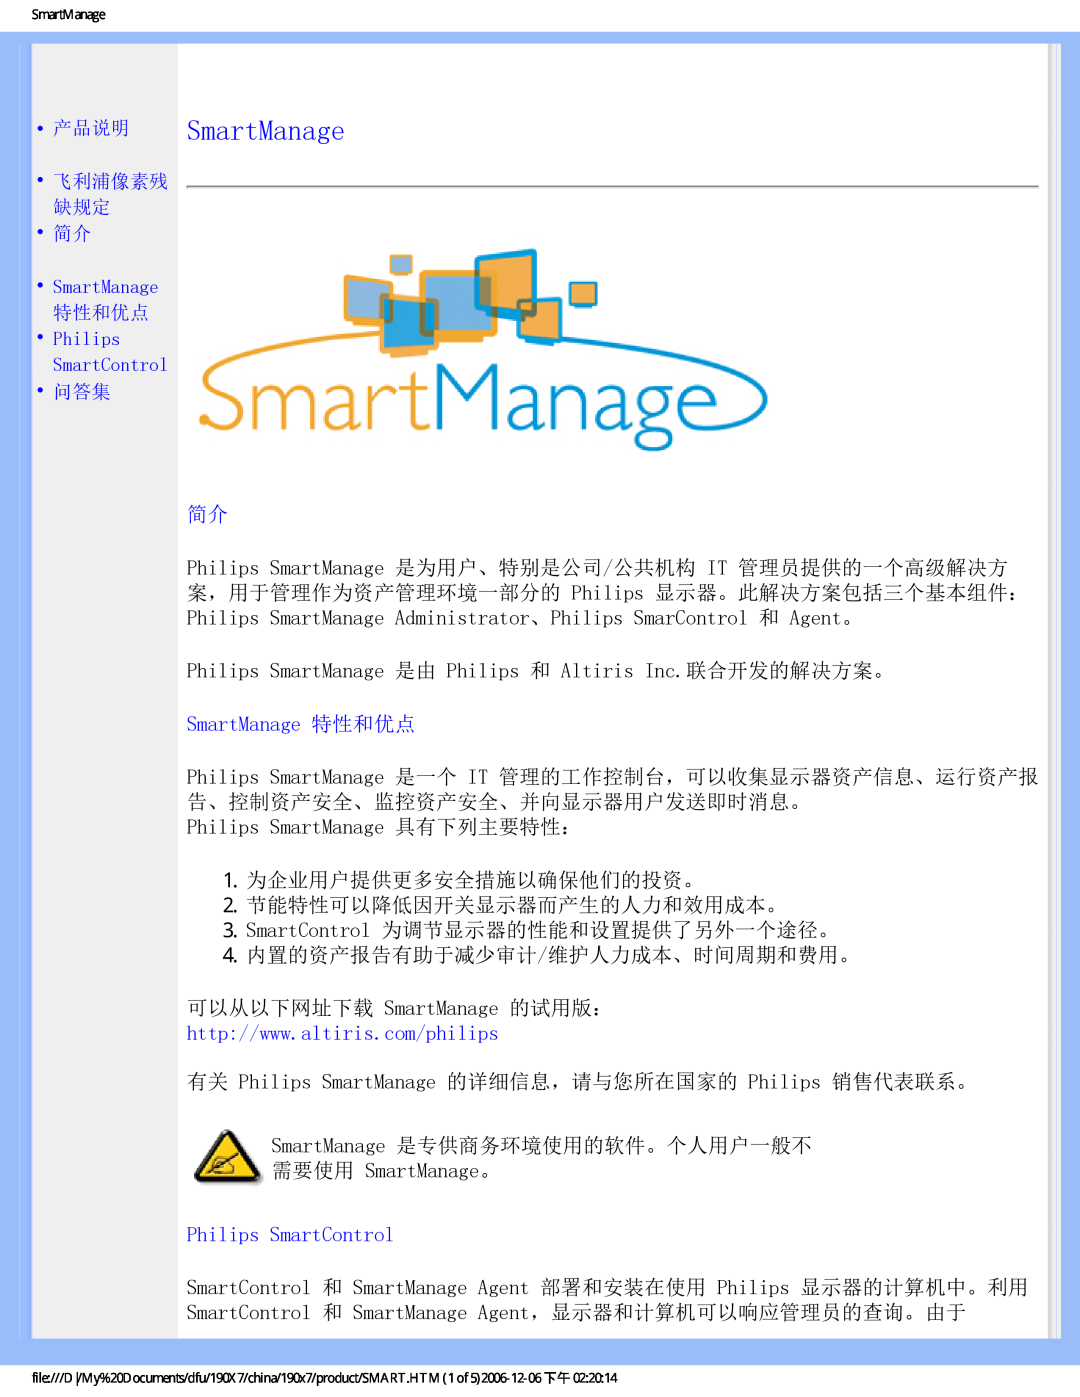 Philips 190X7 user manual SmartManage 特性和优点, Philips SmartControl 